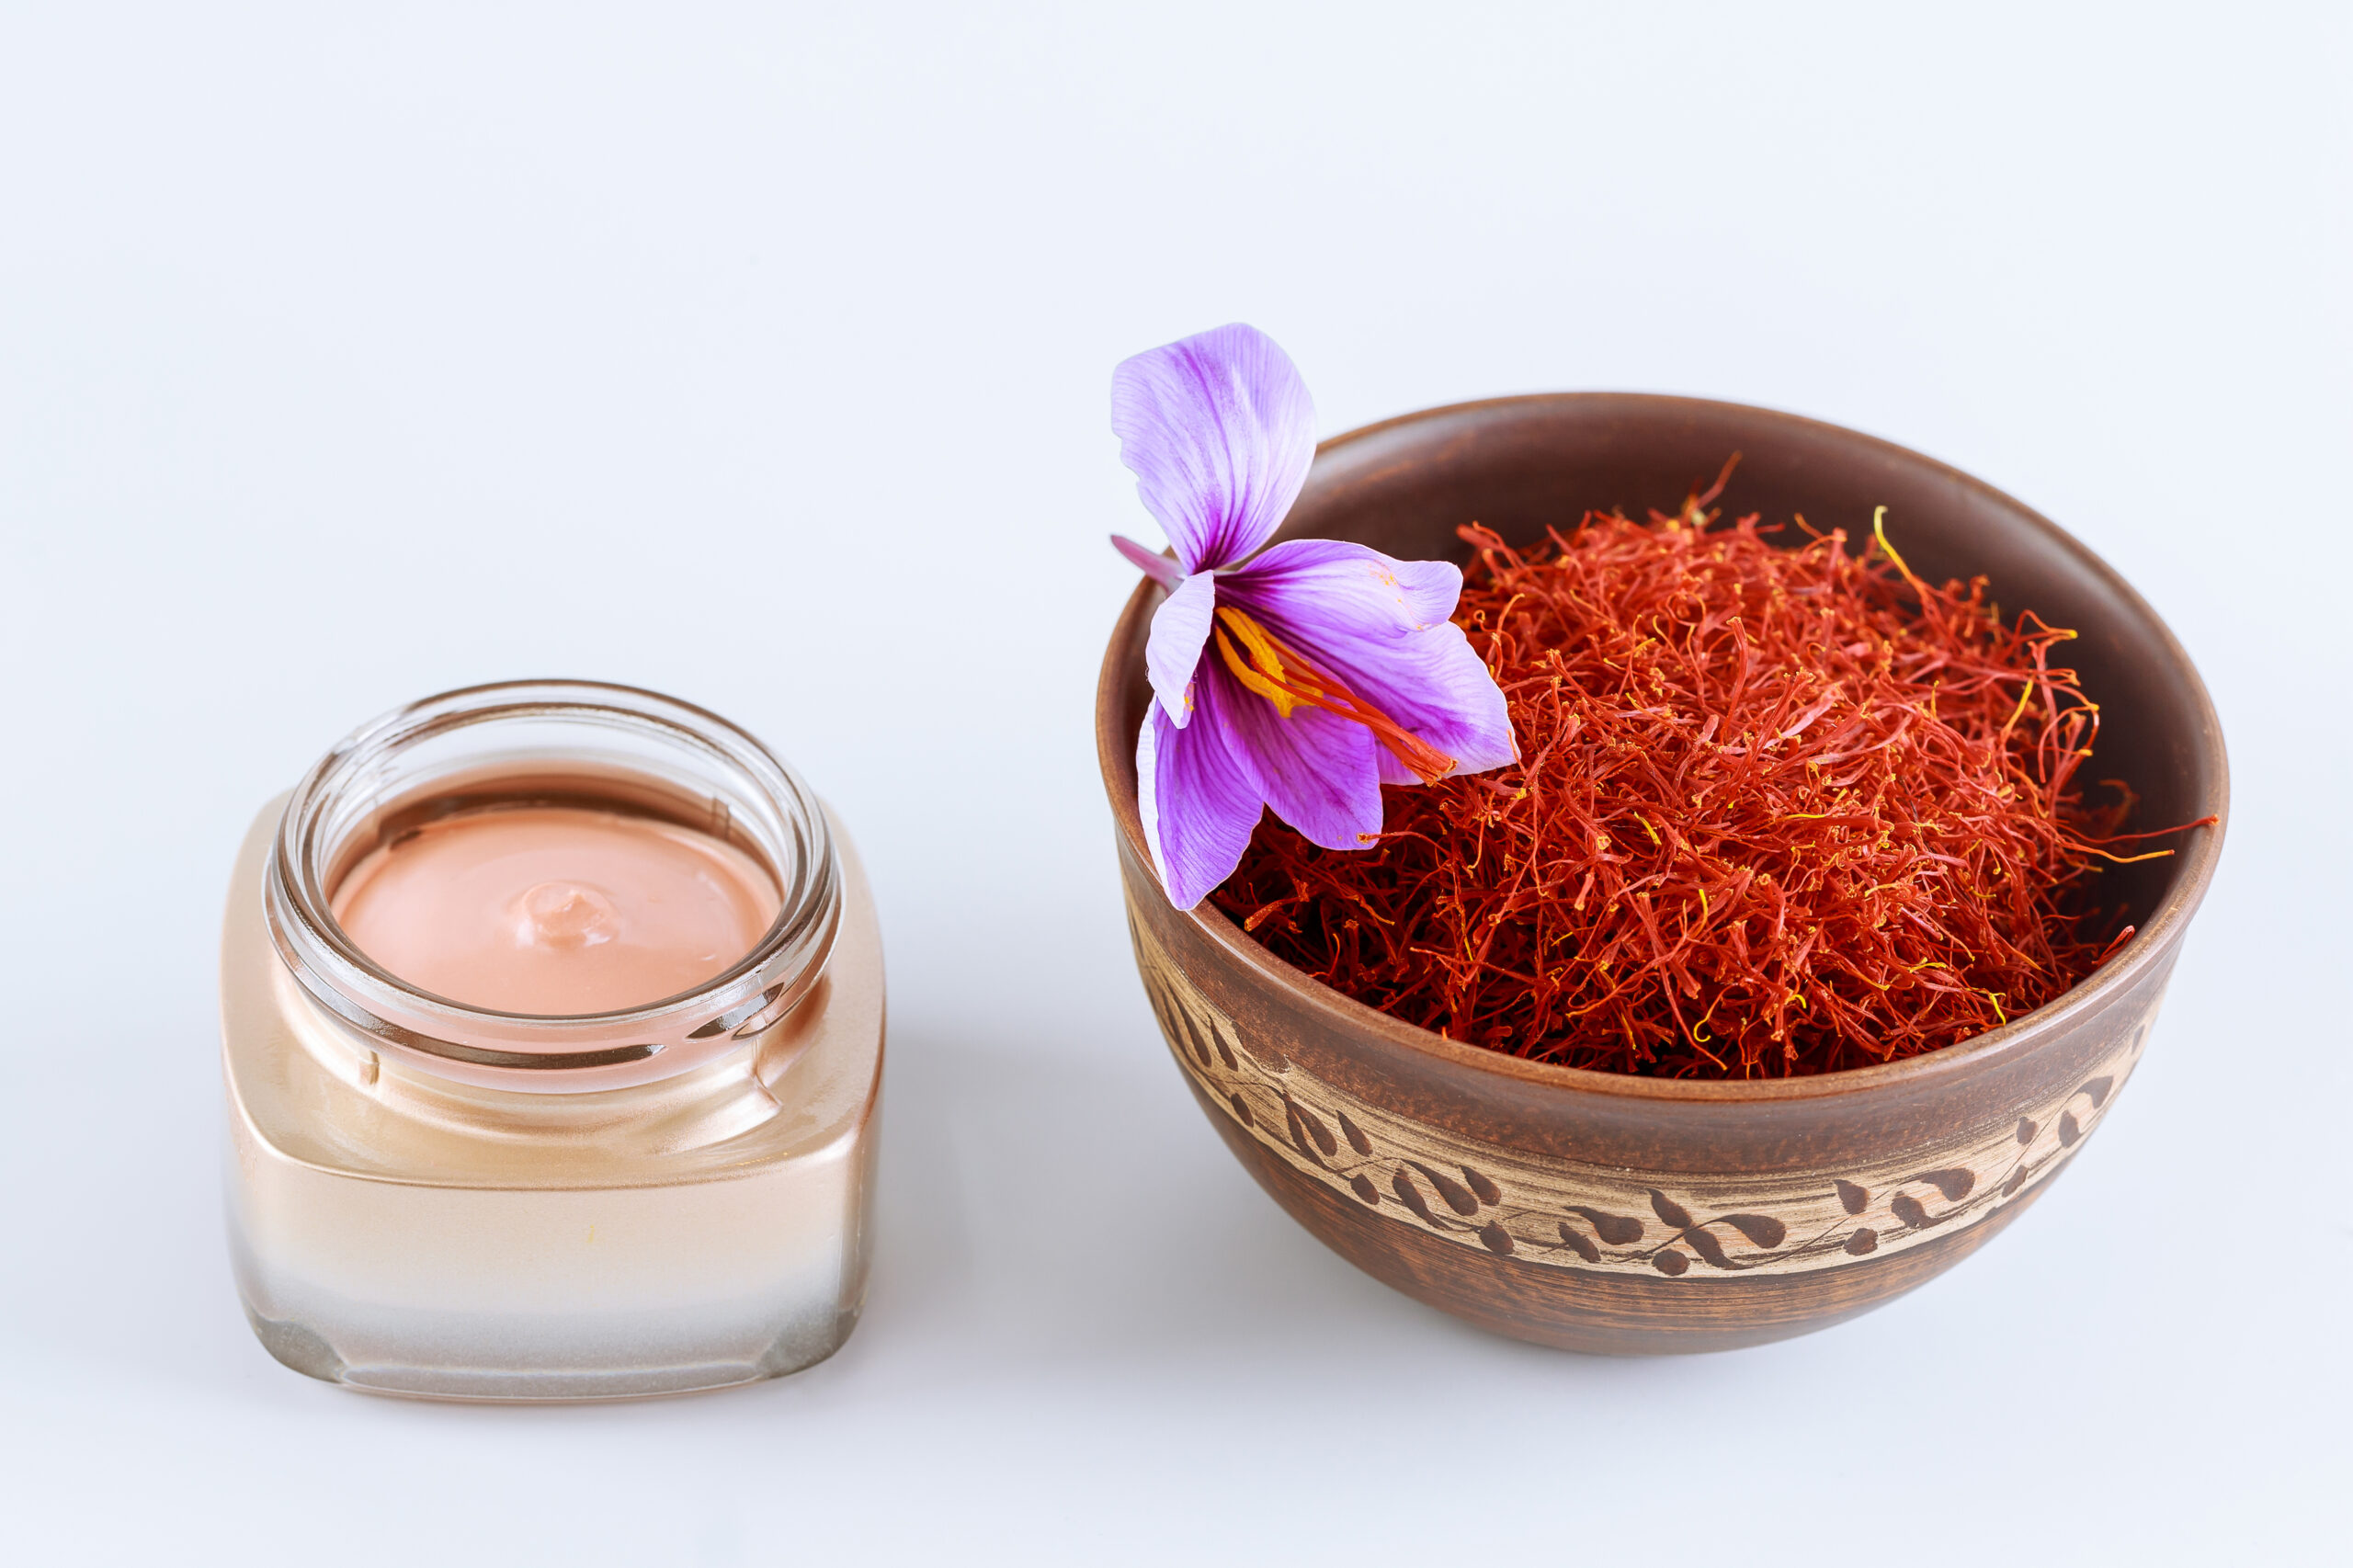 Saffron for natural wellness & beauty! Saffron’s Uses & Benefits.